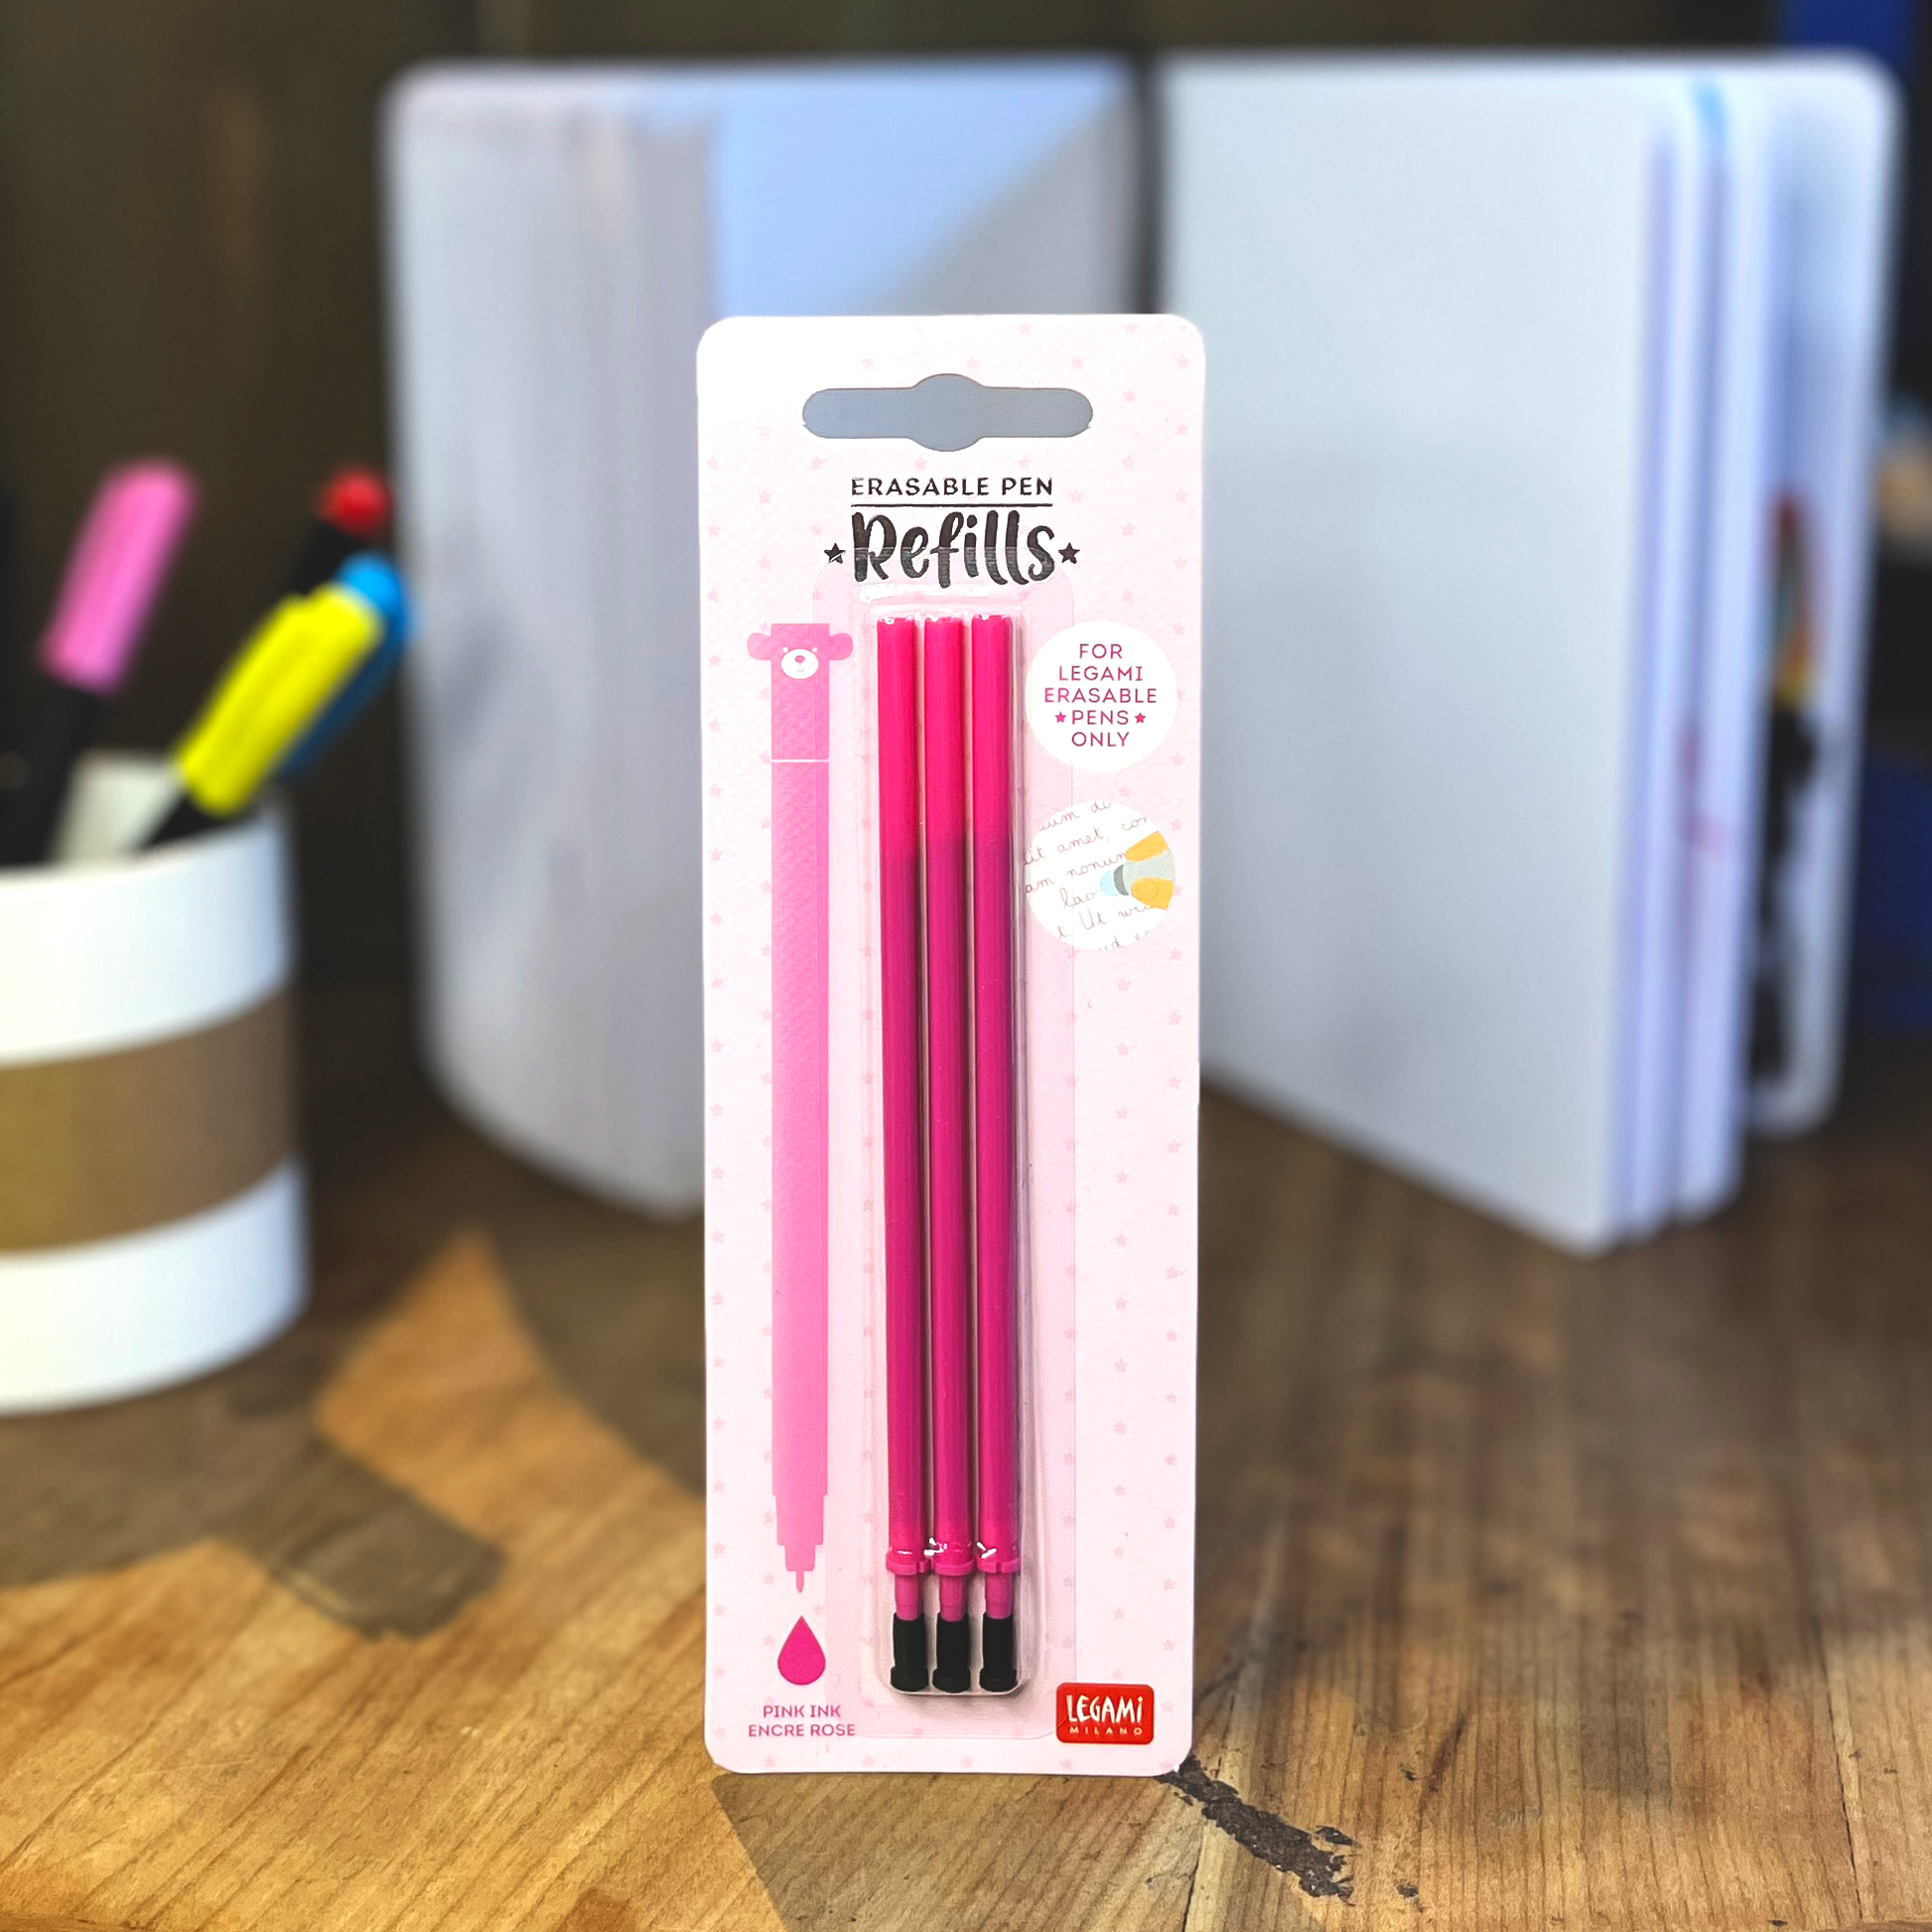 Legami erasable pen refill - Pink – NOODStores